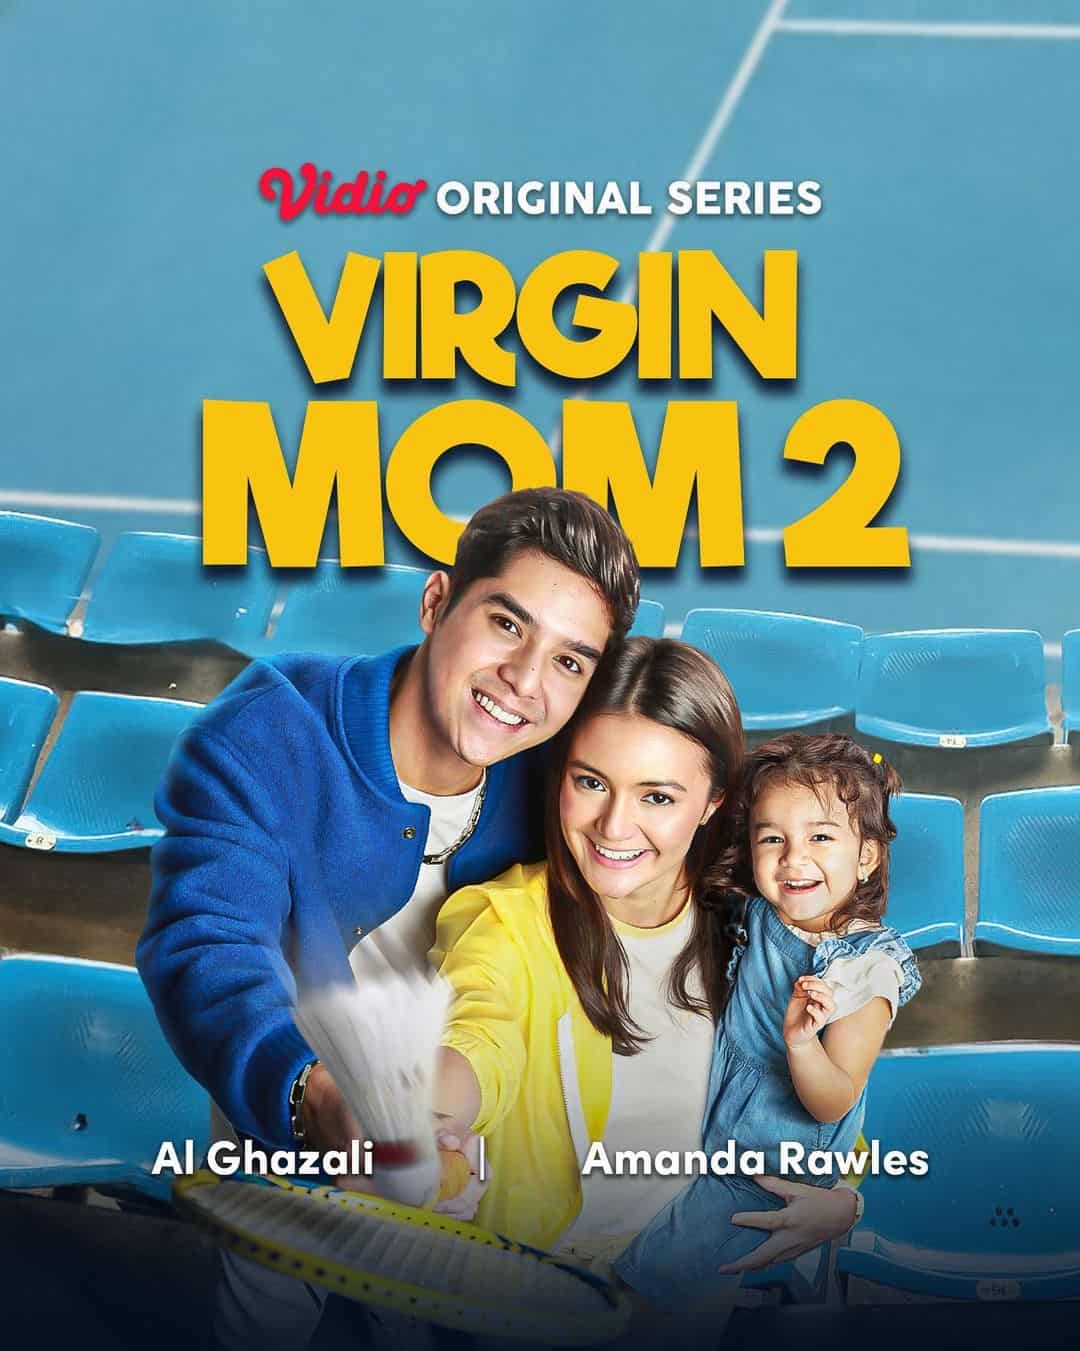 Virgin Mom 2 - Sinopsis, Pemain, OST, Episode, Review